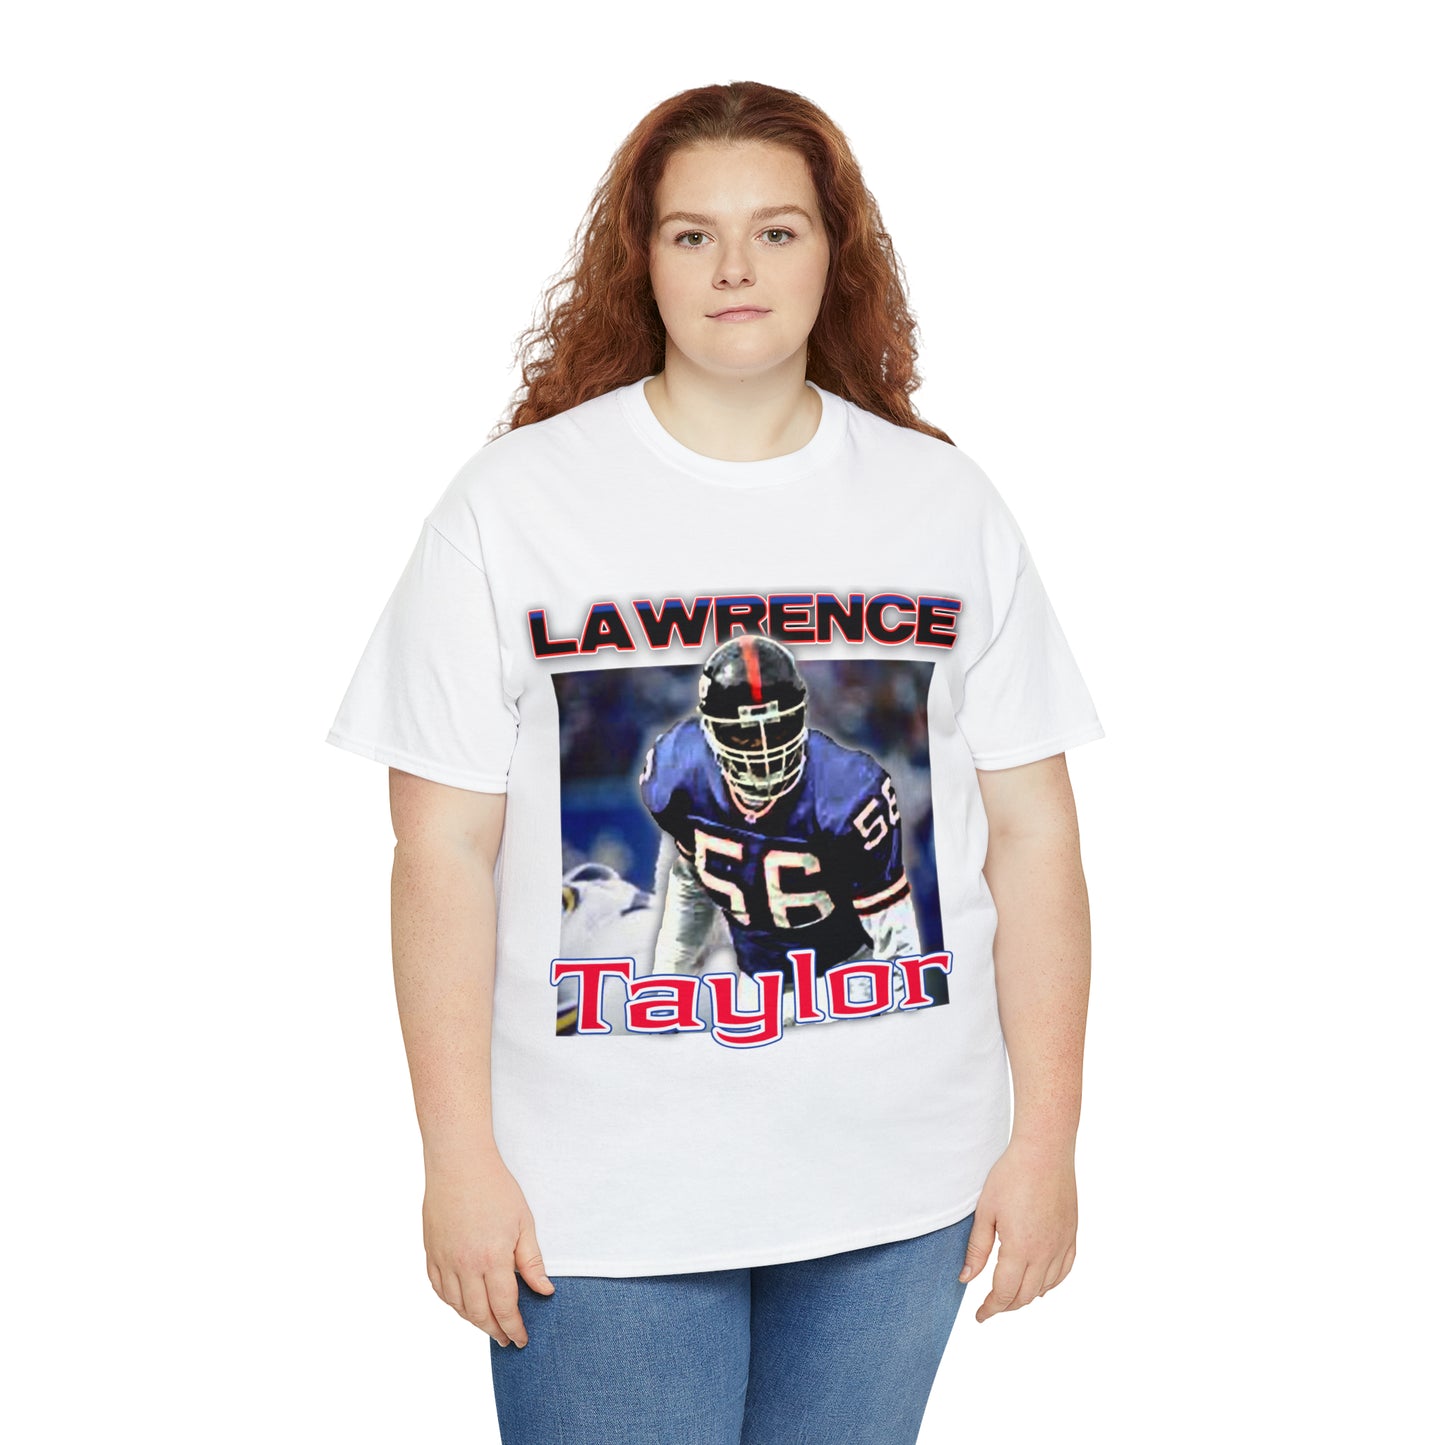 Lawrence Taylor NFL New York Giants Legend Unisex Heavy Cotton Tee